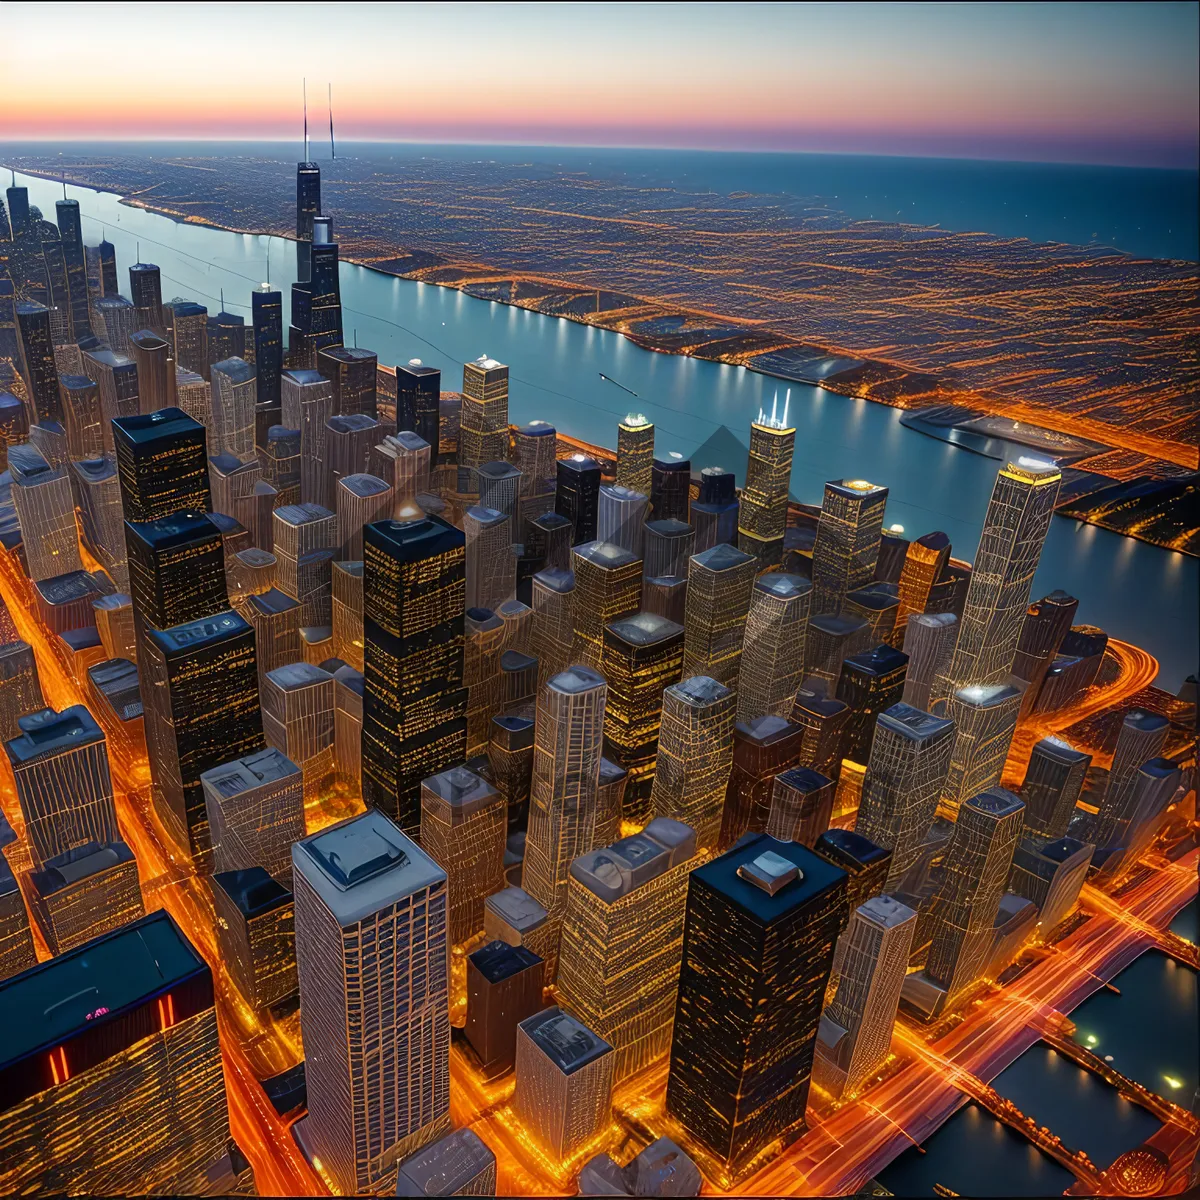 Picture of City Twilight: Majestic Skyscrapers Illuminate the Night Sky